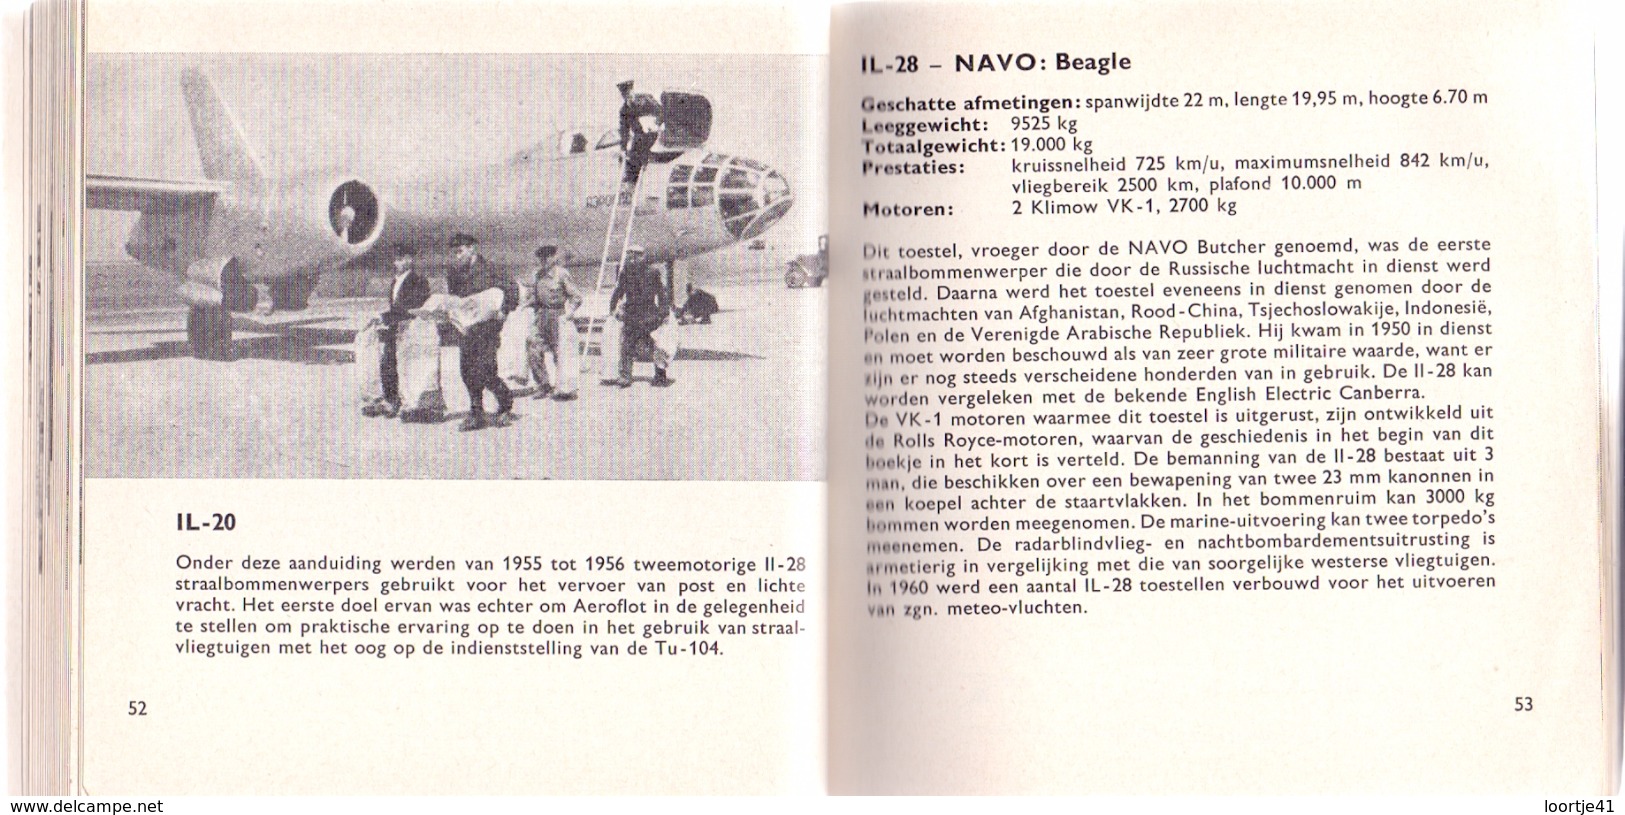 Boekje Russische Vliegtuigen - Wim Dannau - 1962 - Avions Russe - Uitgage Maraboe - Pratique